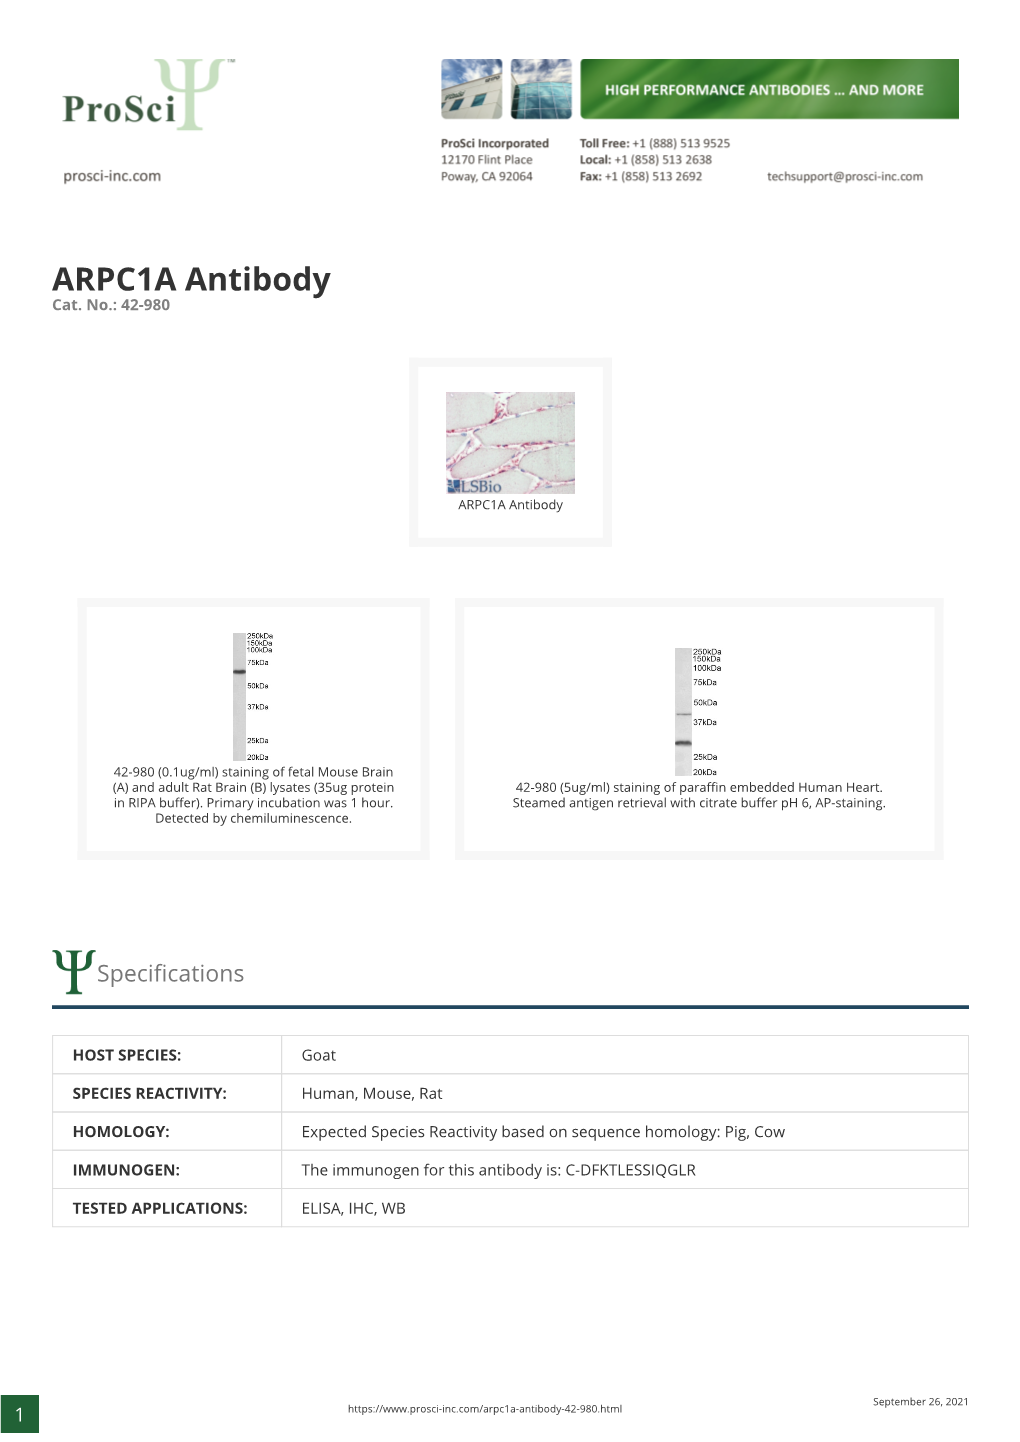 ARPC1A Antibody Cat